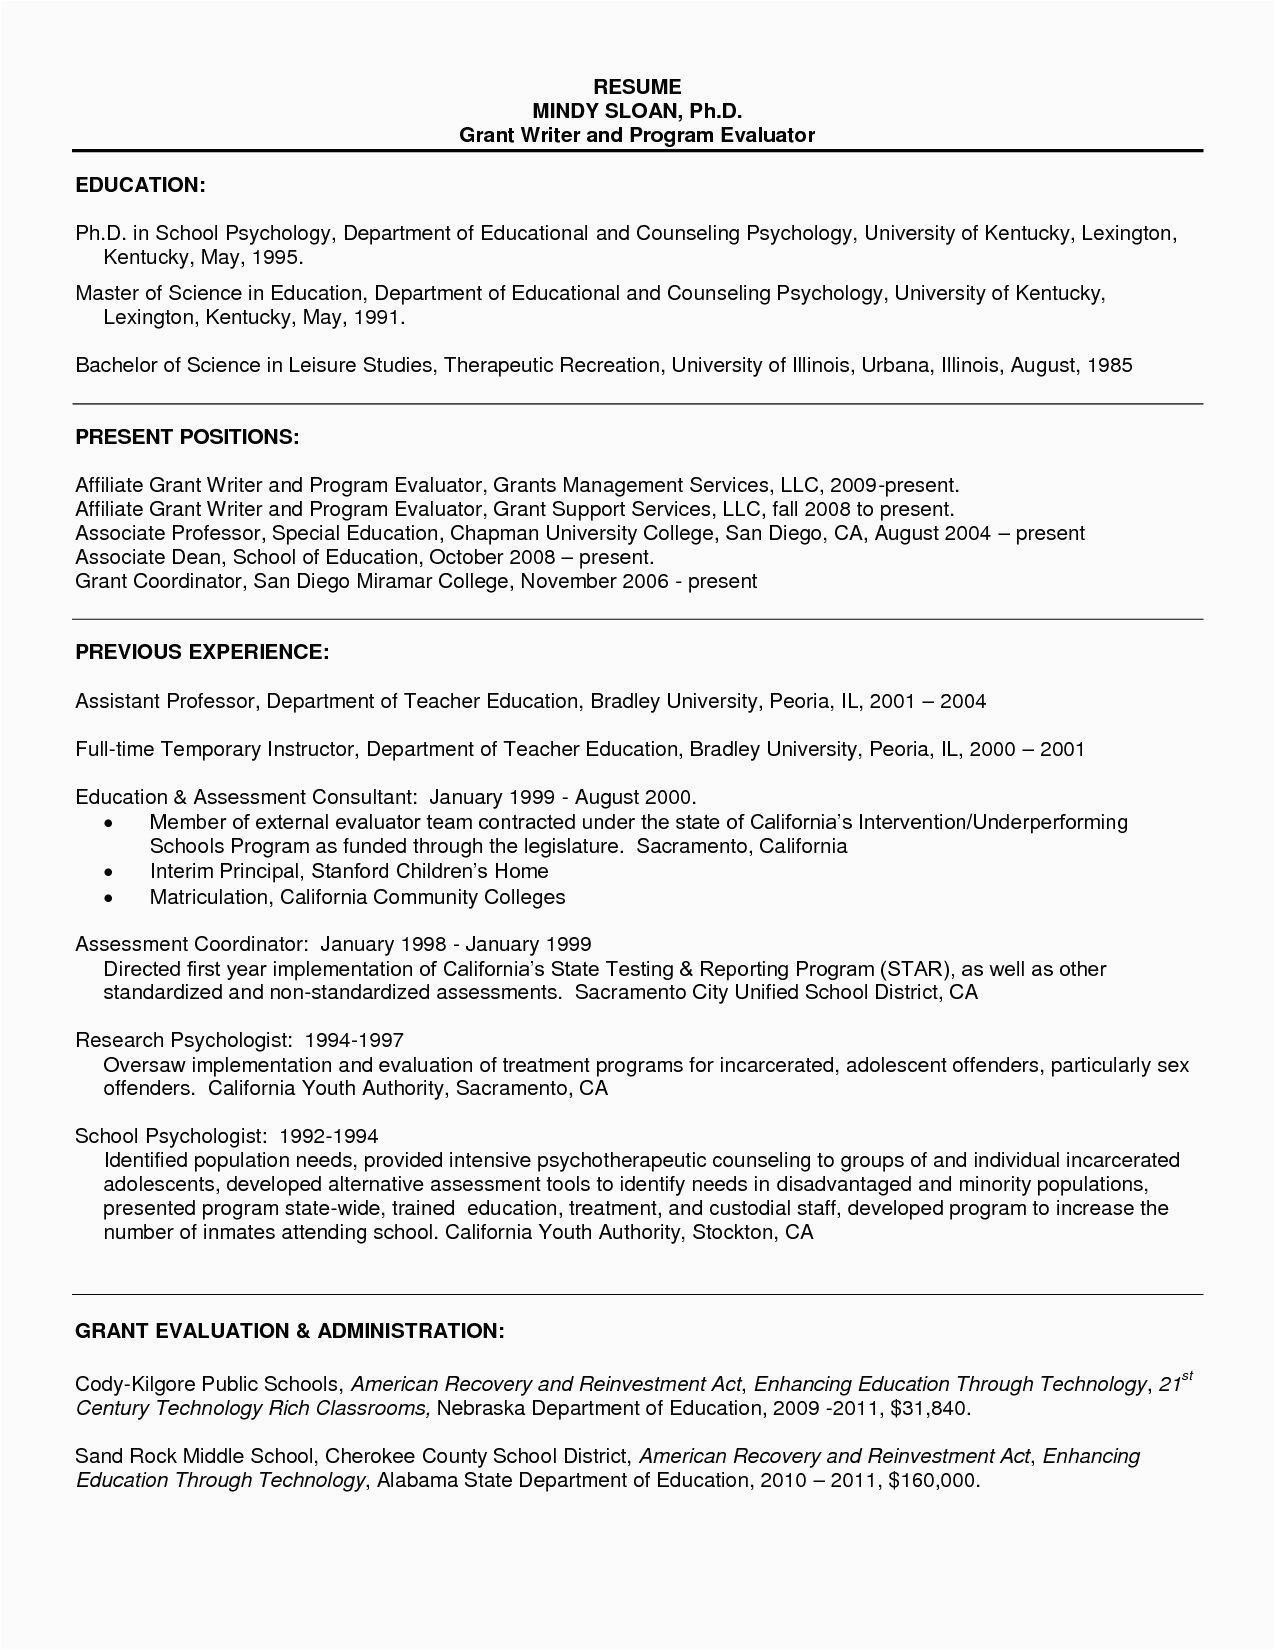 Sample Academic Resume for Graduate School Graduate School Resume Template Addictionary